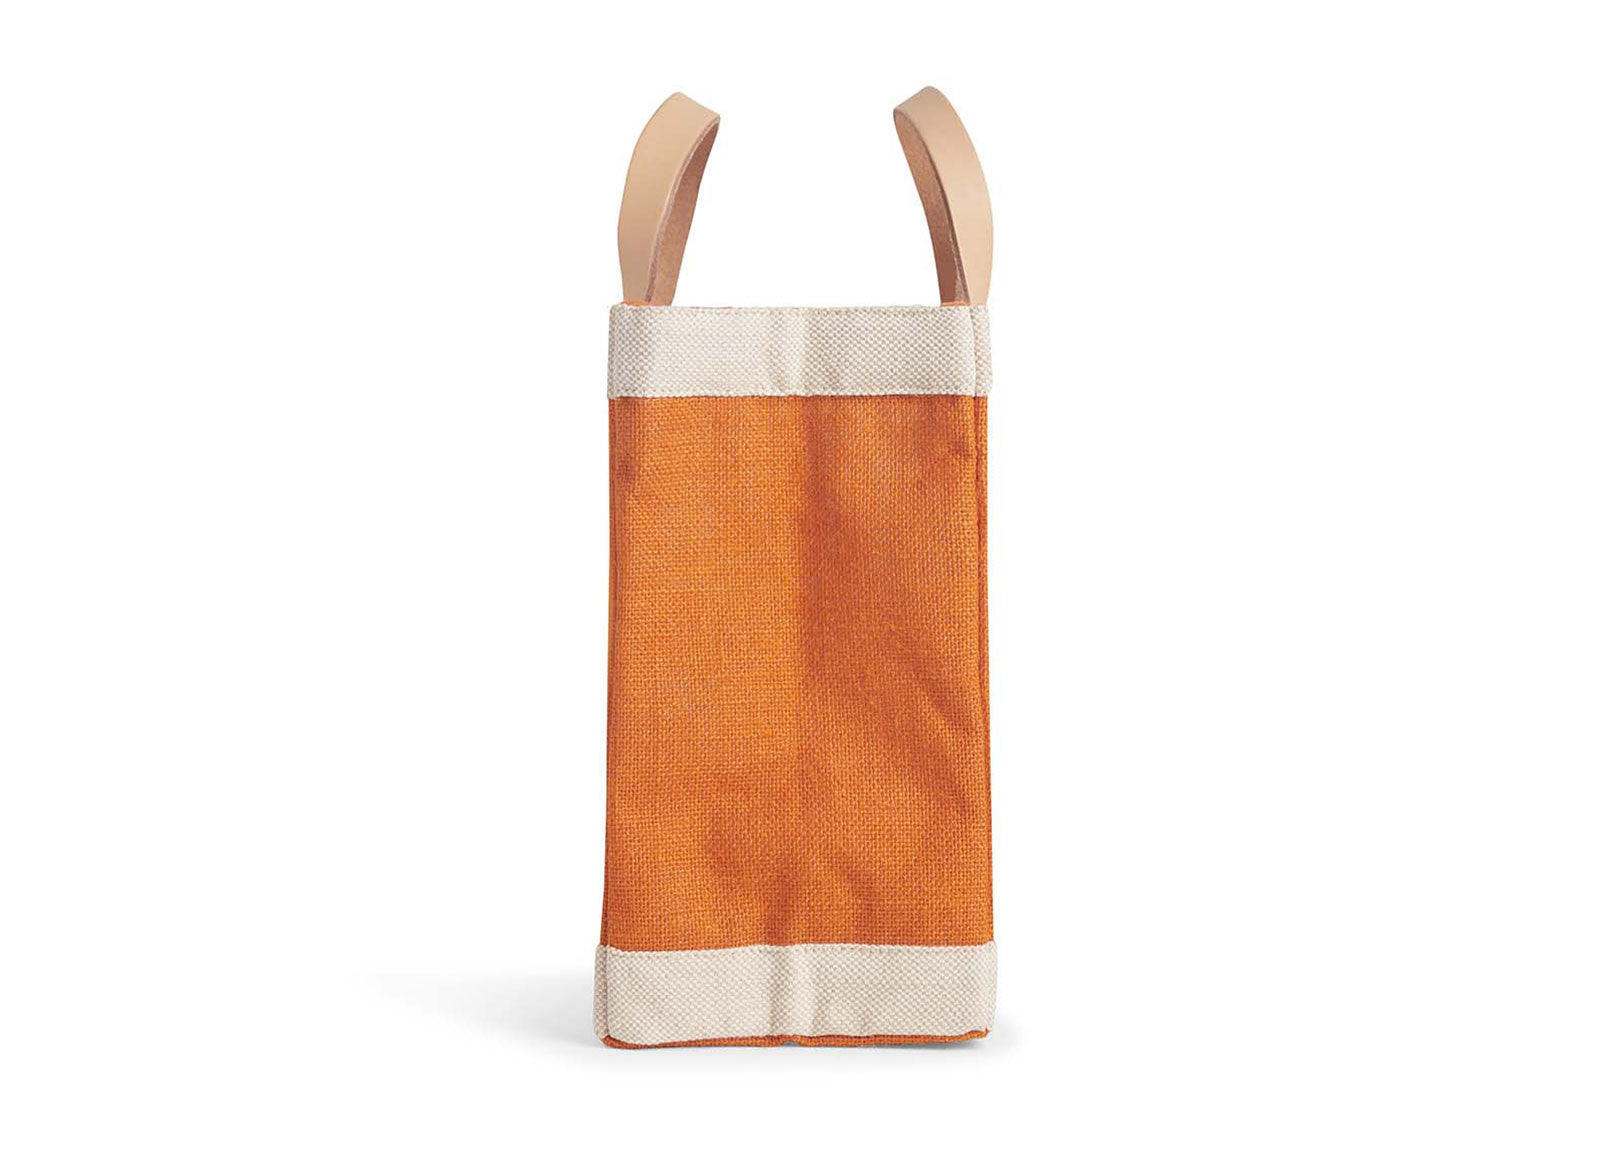 Customized Petite Market Bag in Citrus - Wholesale